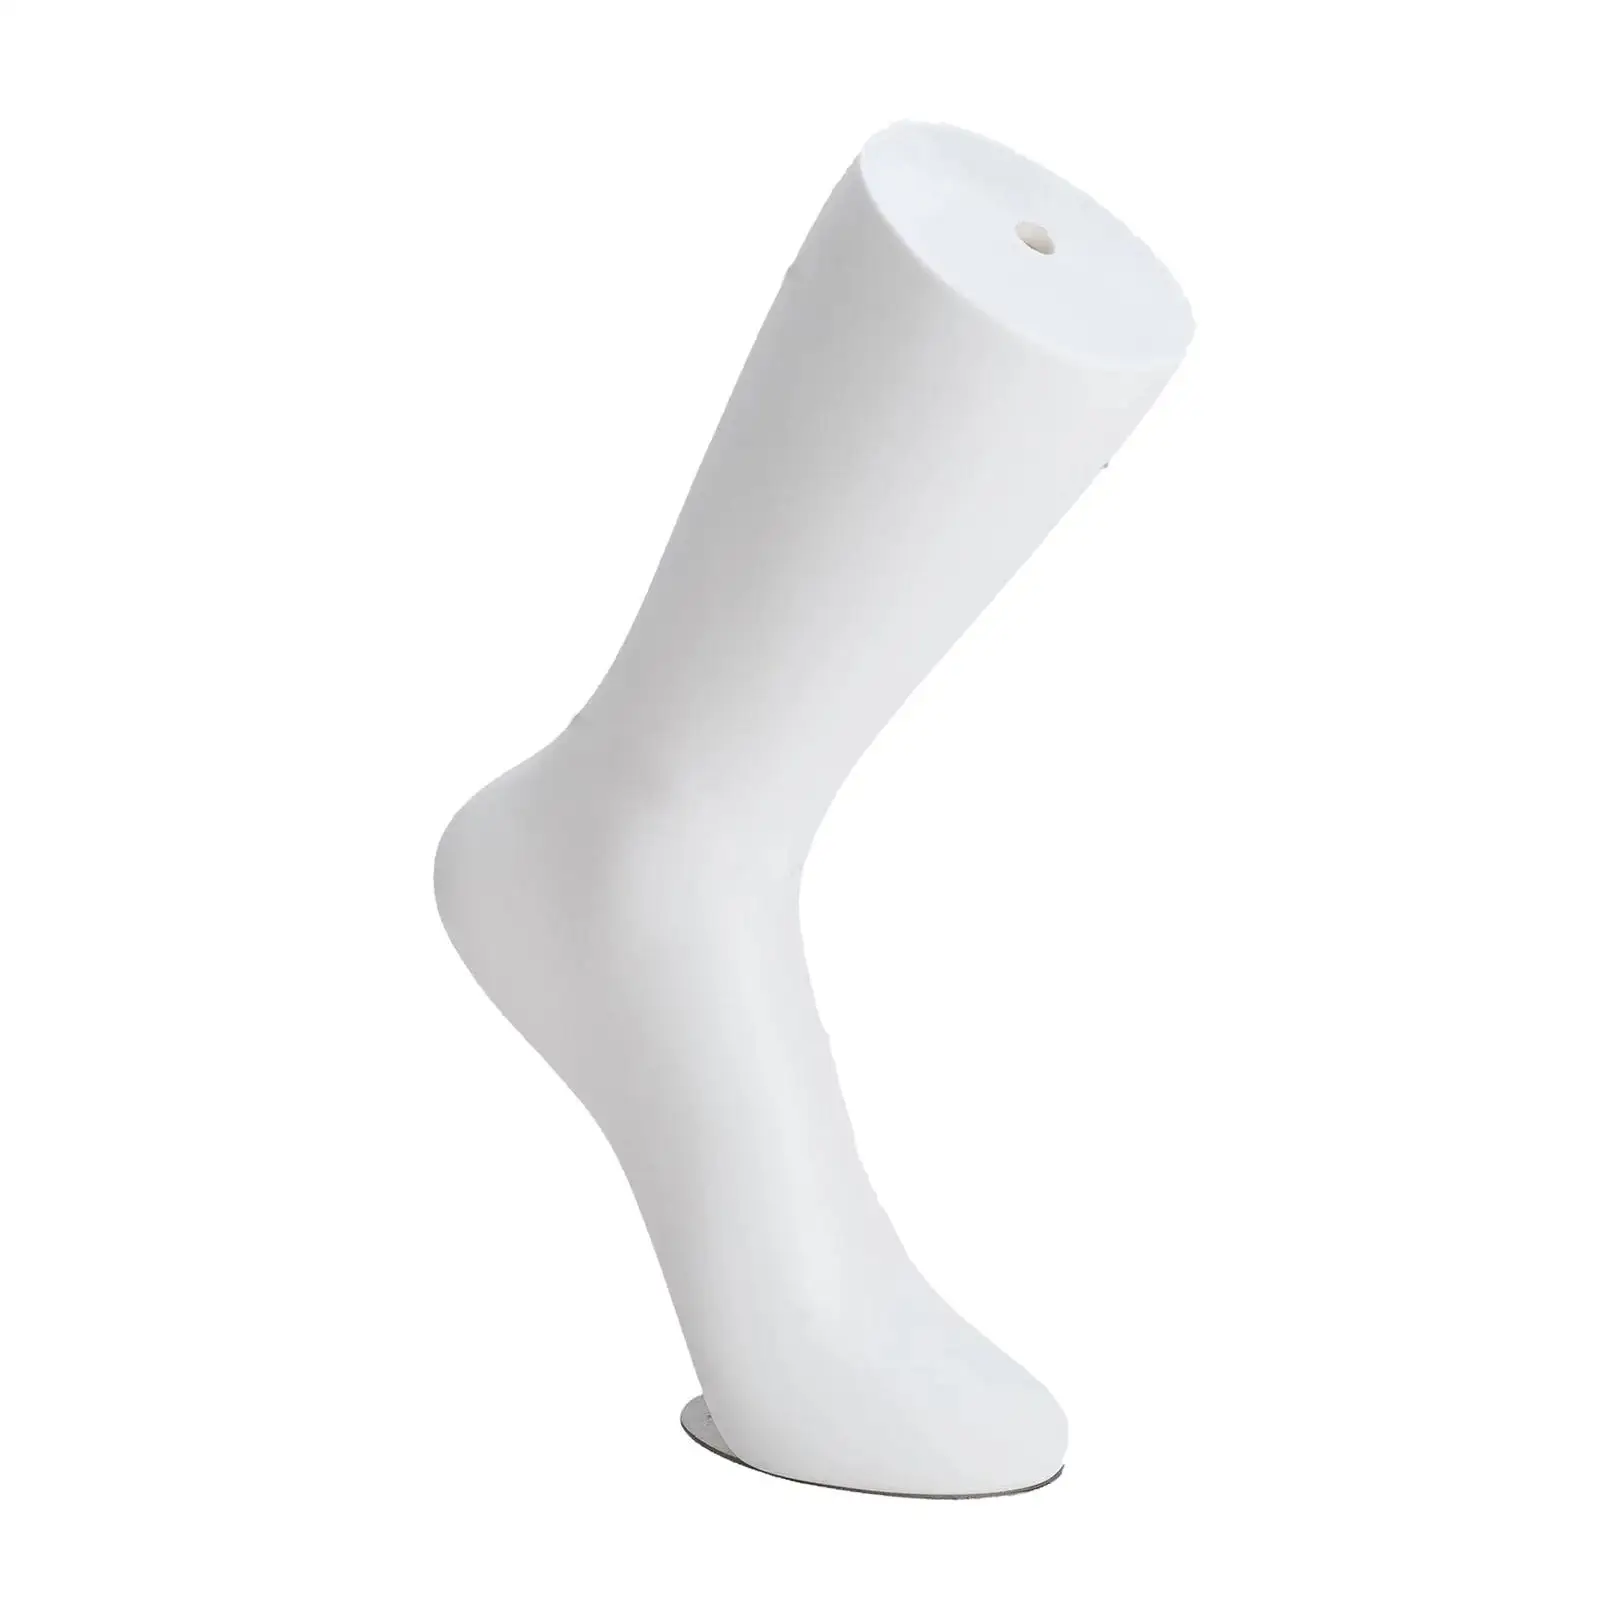 PVC Mannequin Feet Props Female for Short Stocking Sandals Countertop Shop Retail